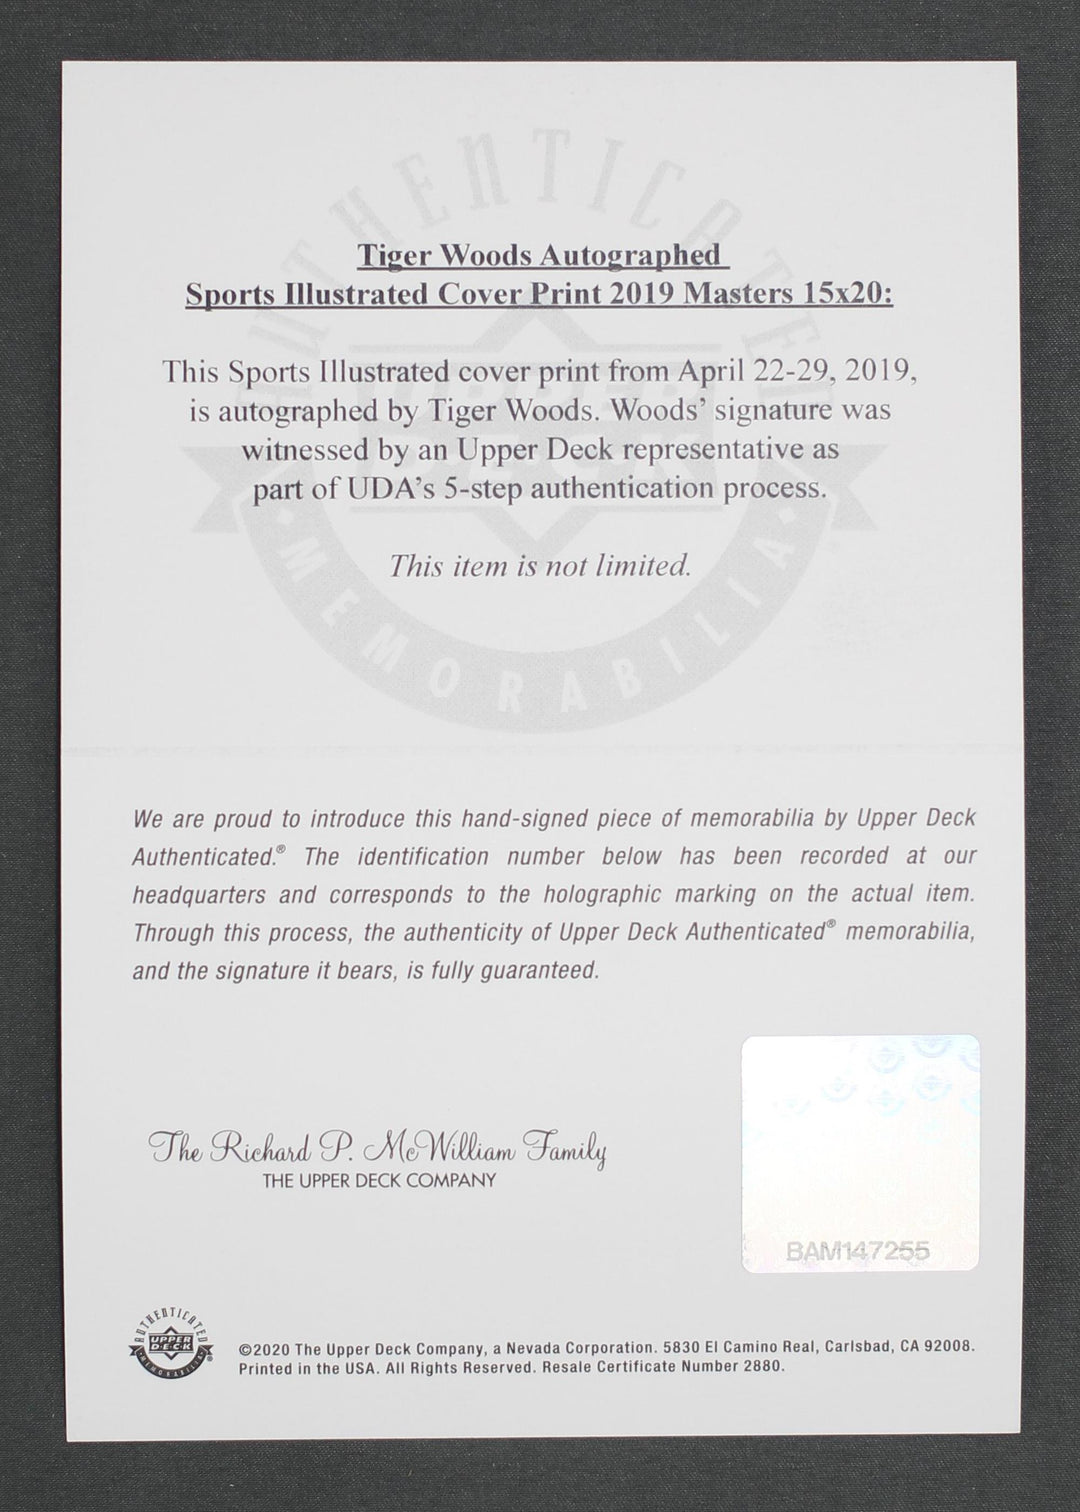 Minnesota Timberwolves send fan letter, autographed basketball - Sports  Illustrated